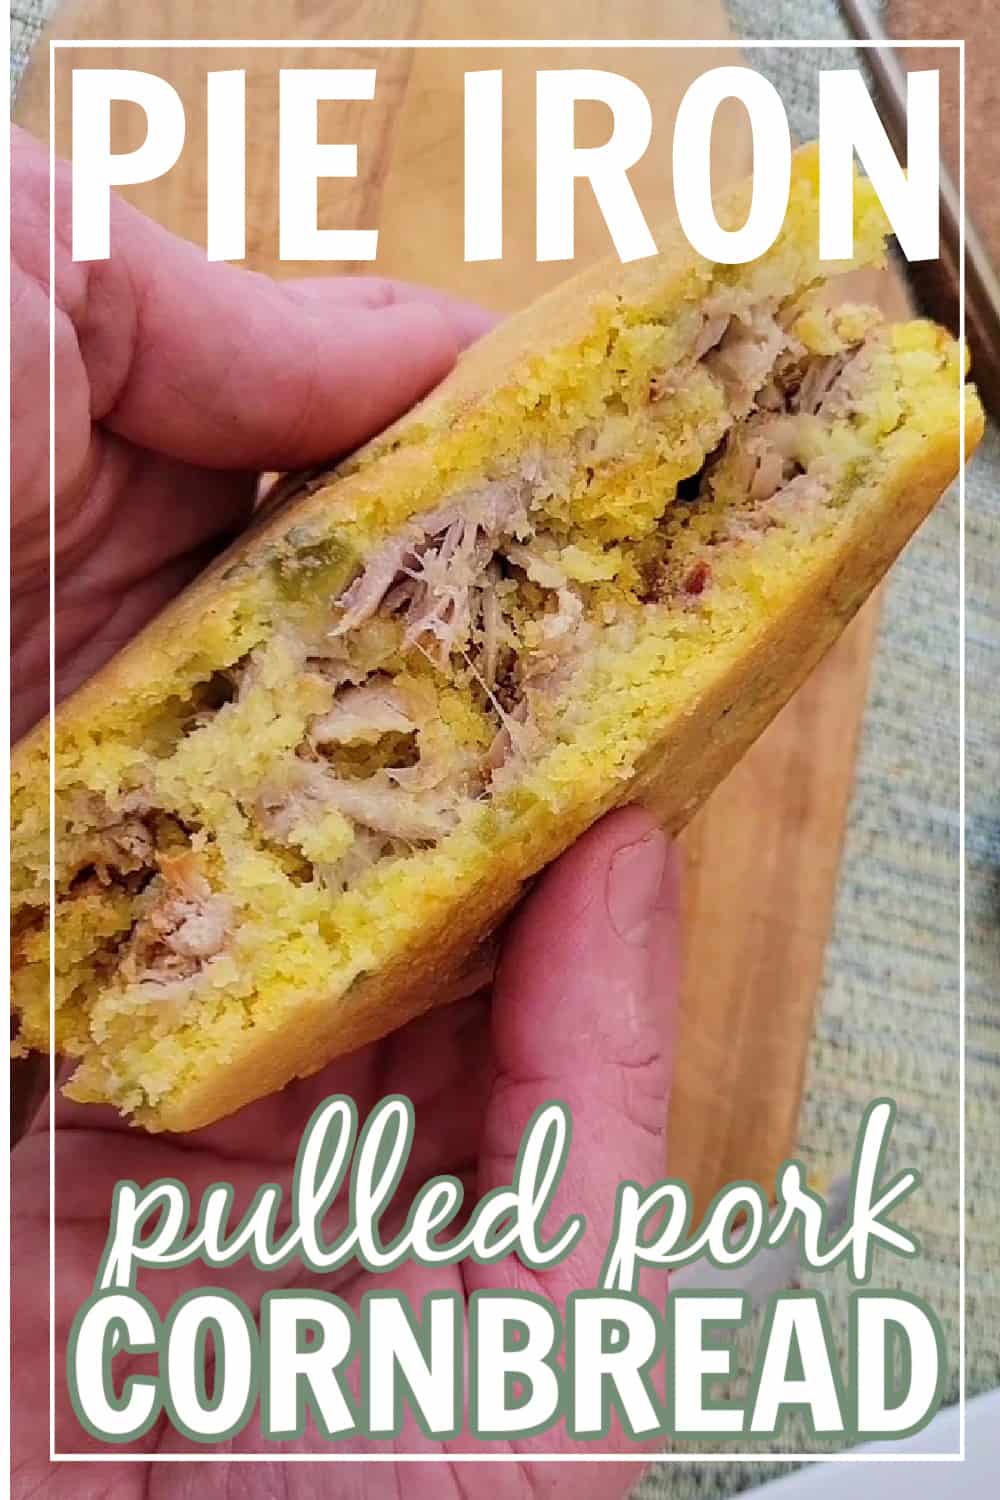 Pulled pork stuffed in cornbread.